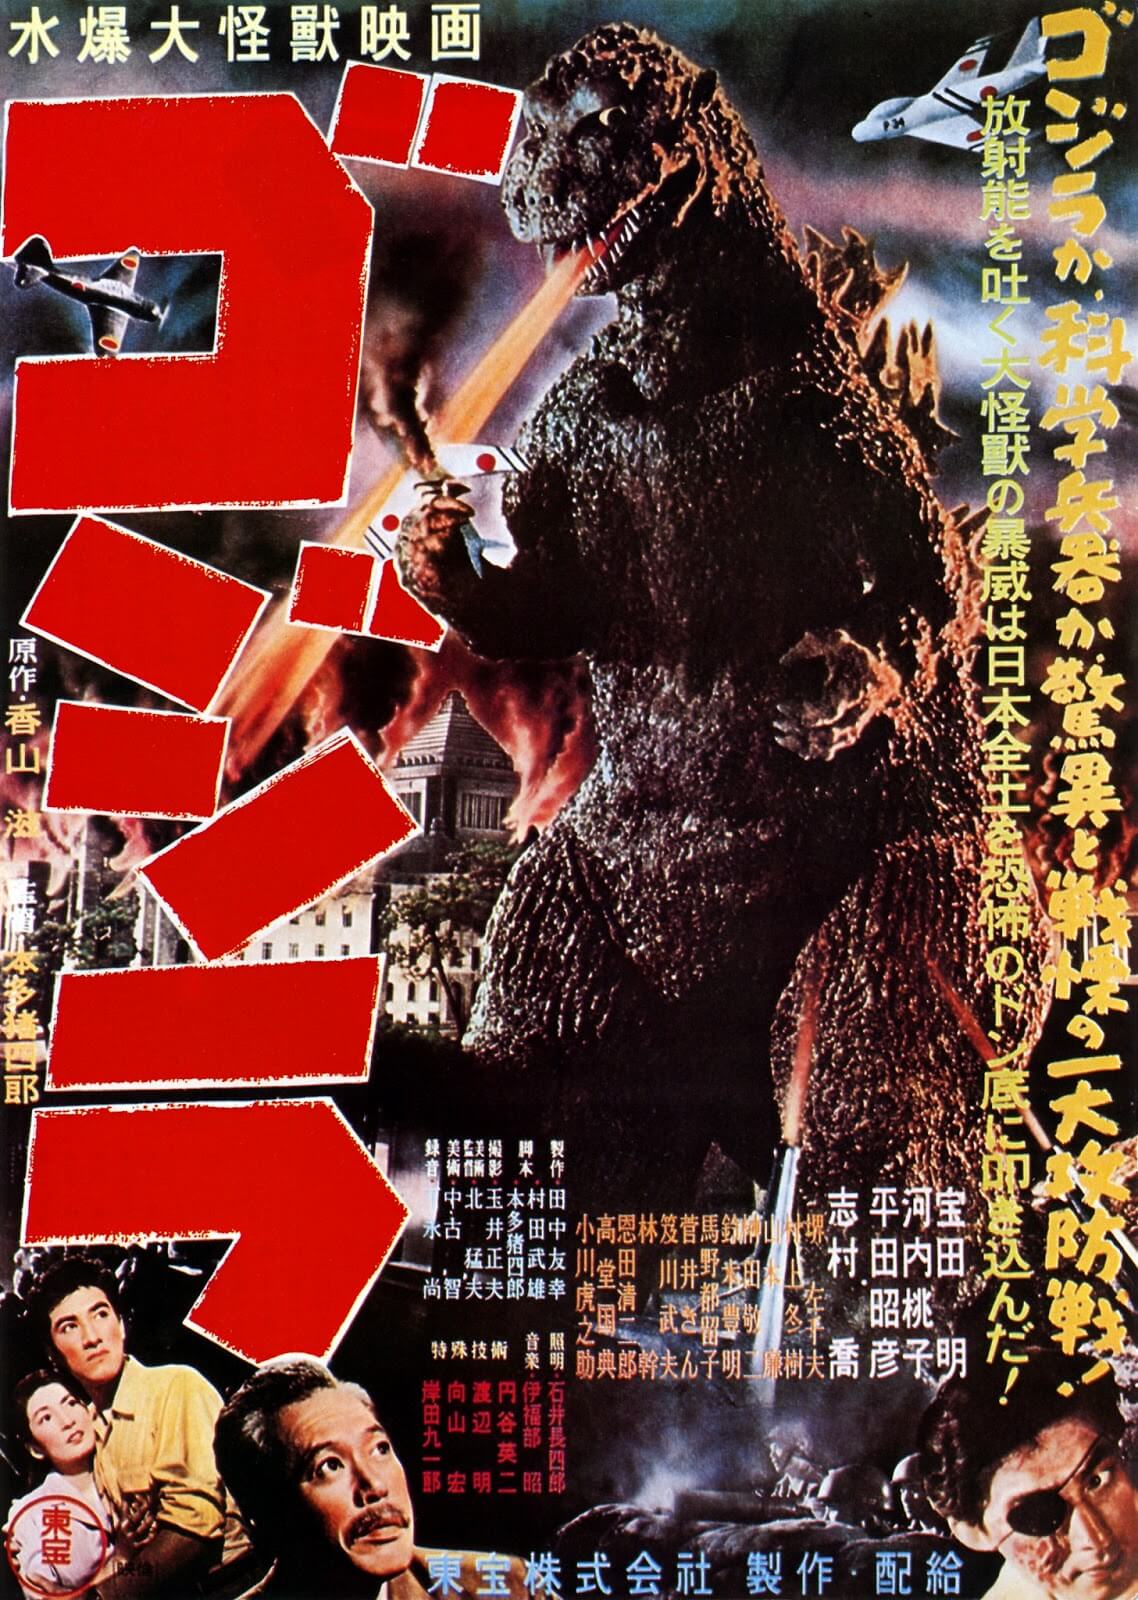 The original Godzilla movie poster from 1954